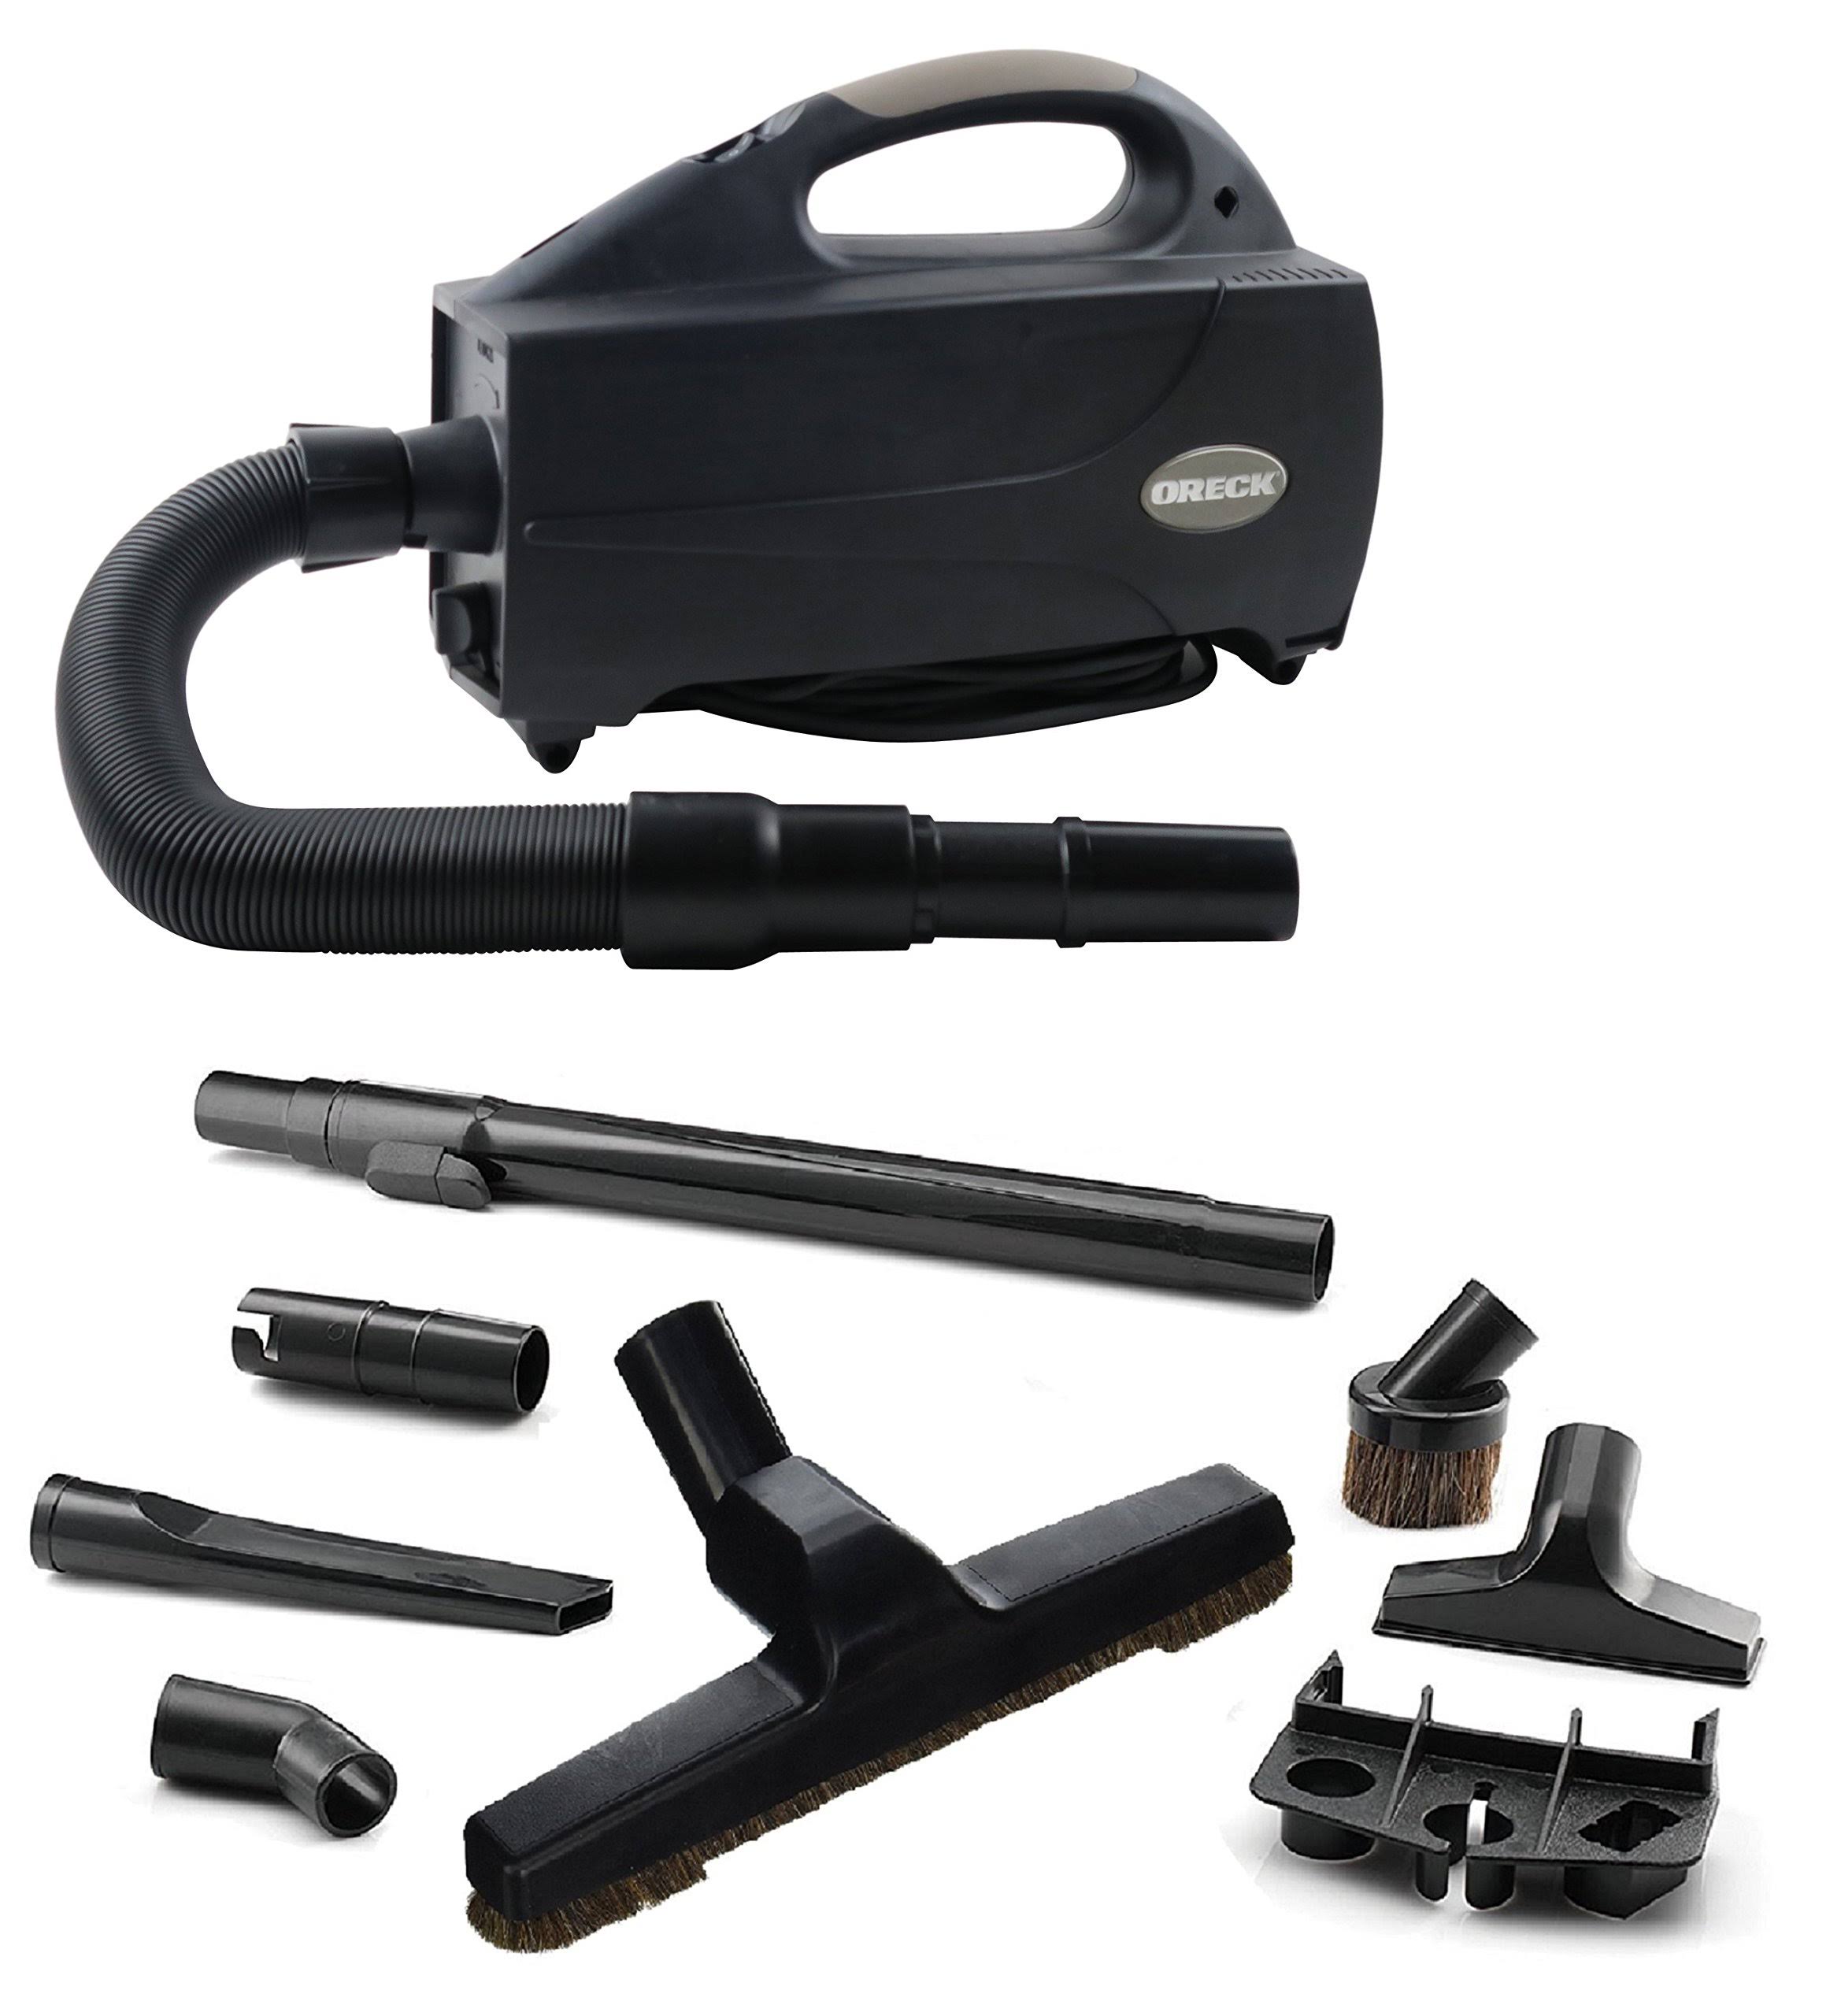 Oreck Compact Canister Vacuum-Handheld Cannister Cleaner & Blower w/HEPA Filter Bag for Dusting Dirt & Dog Hair for Hardwood, Wooden & Tile Floors,